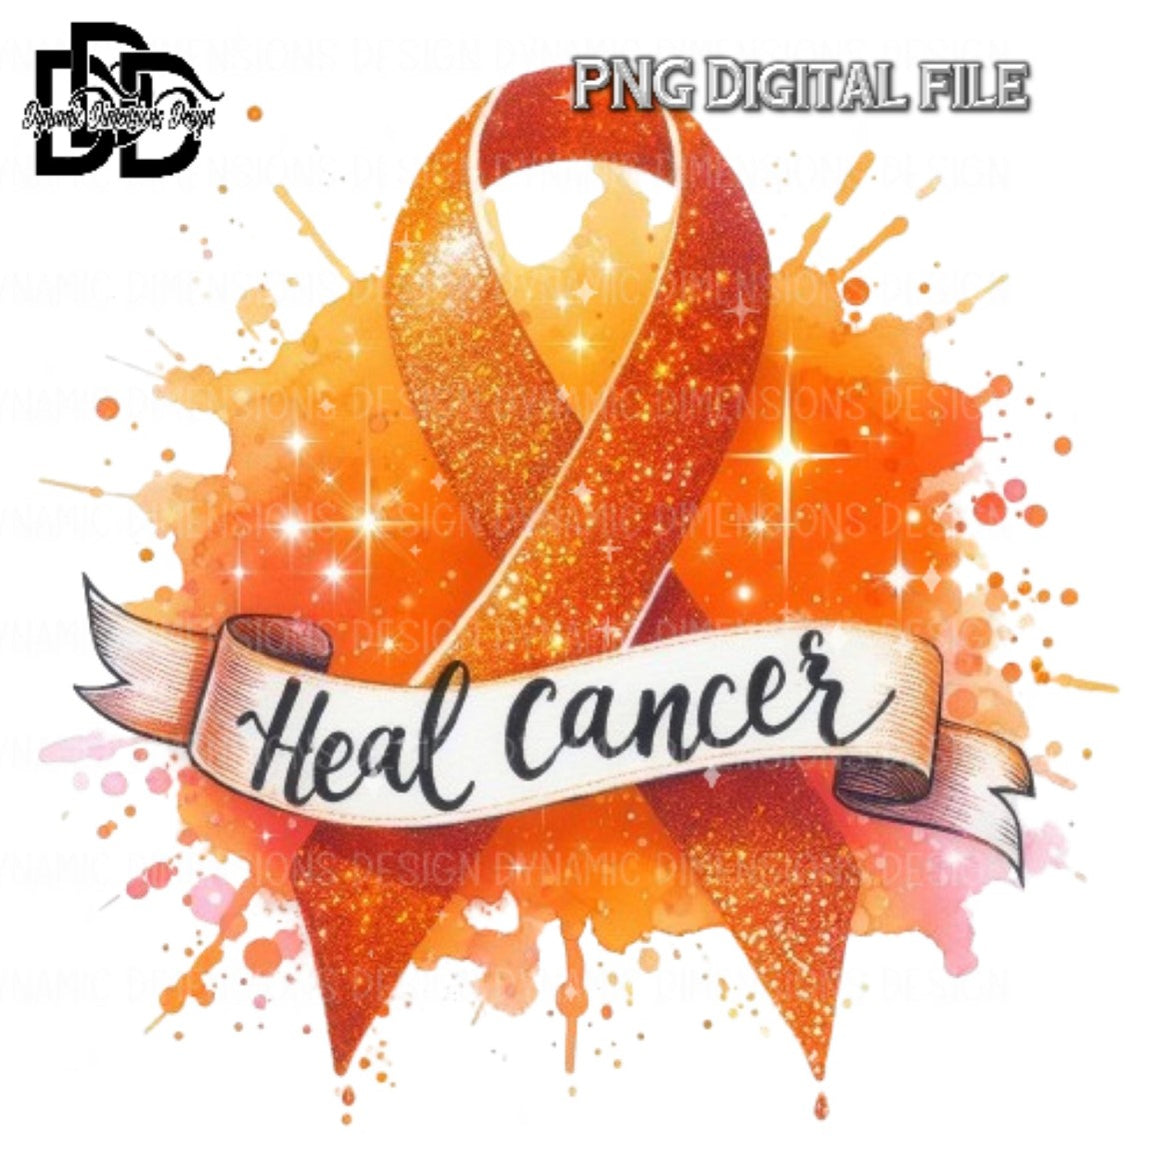 HEAL CANCER Awareness Ribbon, Orange PNG